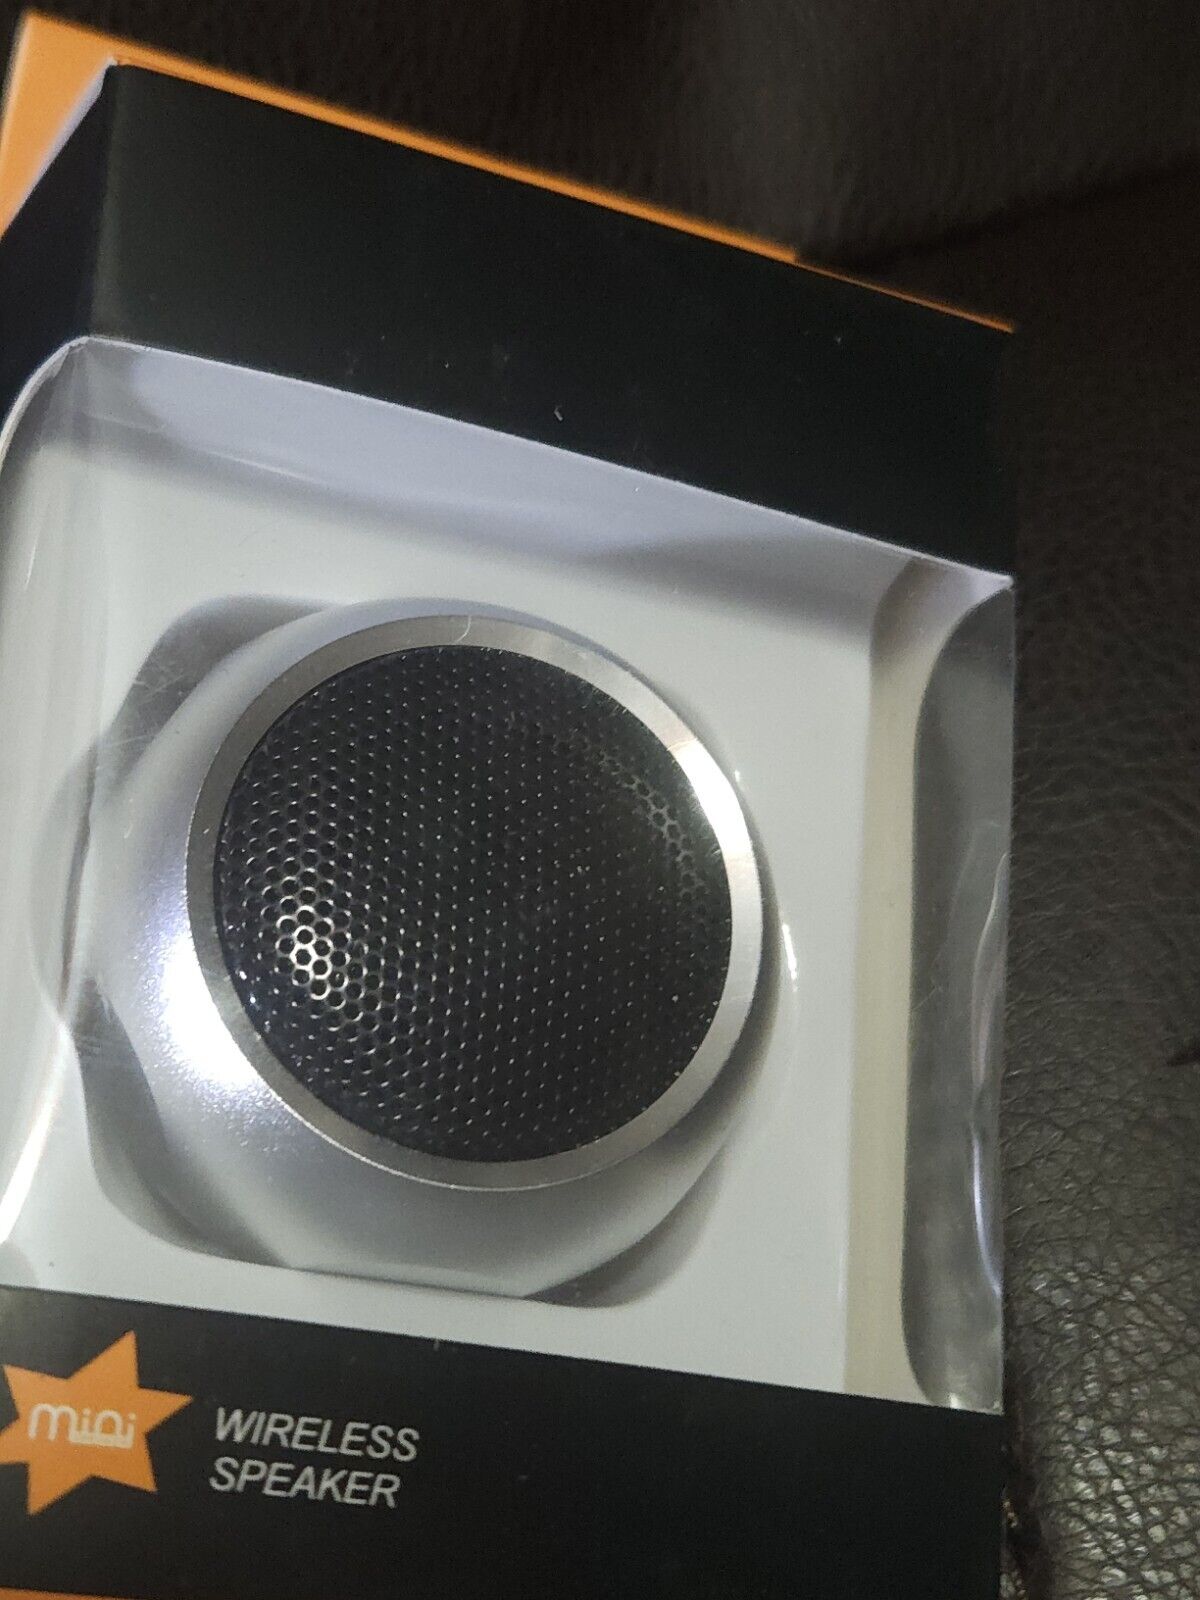 MINI Portable Wireless Bluetooth Speaker Designed for Phones, Tablets, Laptops MINI